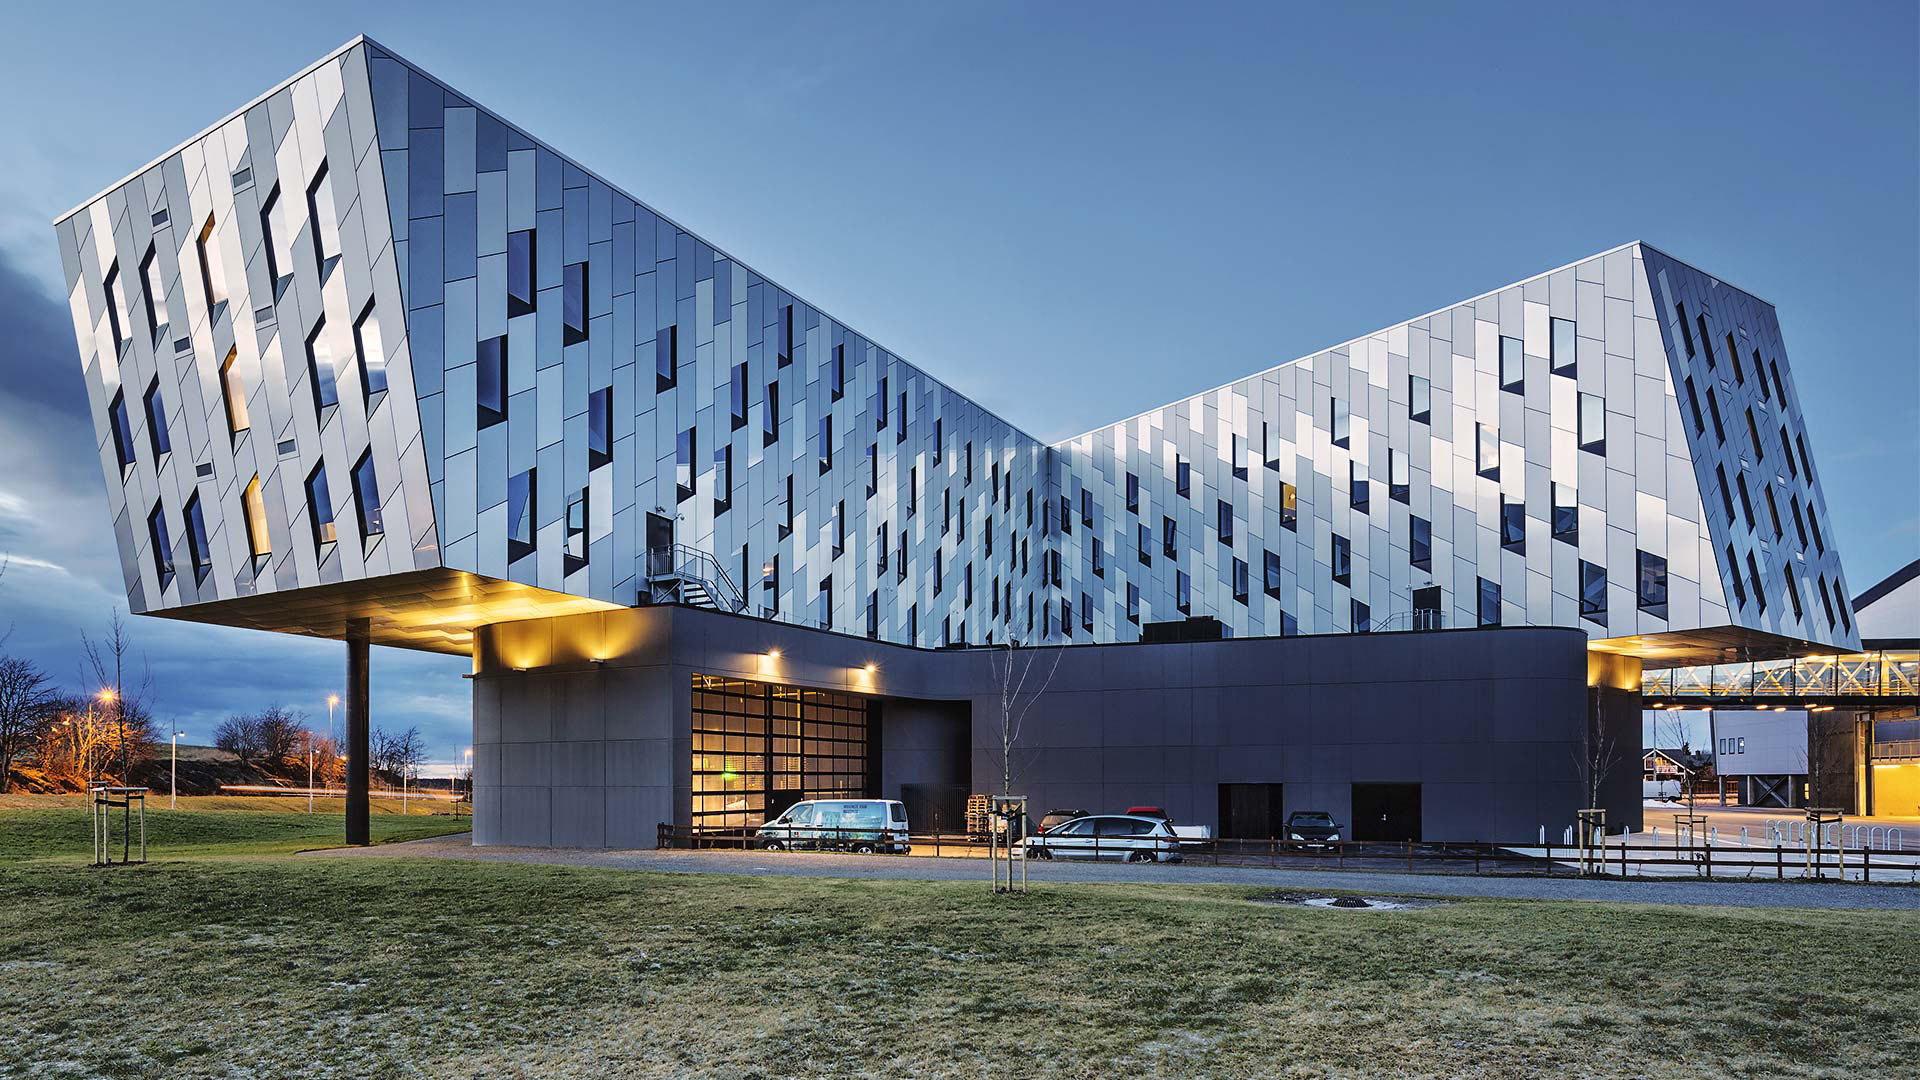 Fishing-Design Facade Transforms Clarion Hotel Energy in Norway